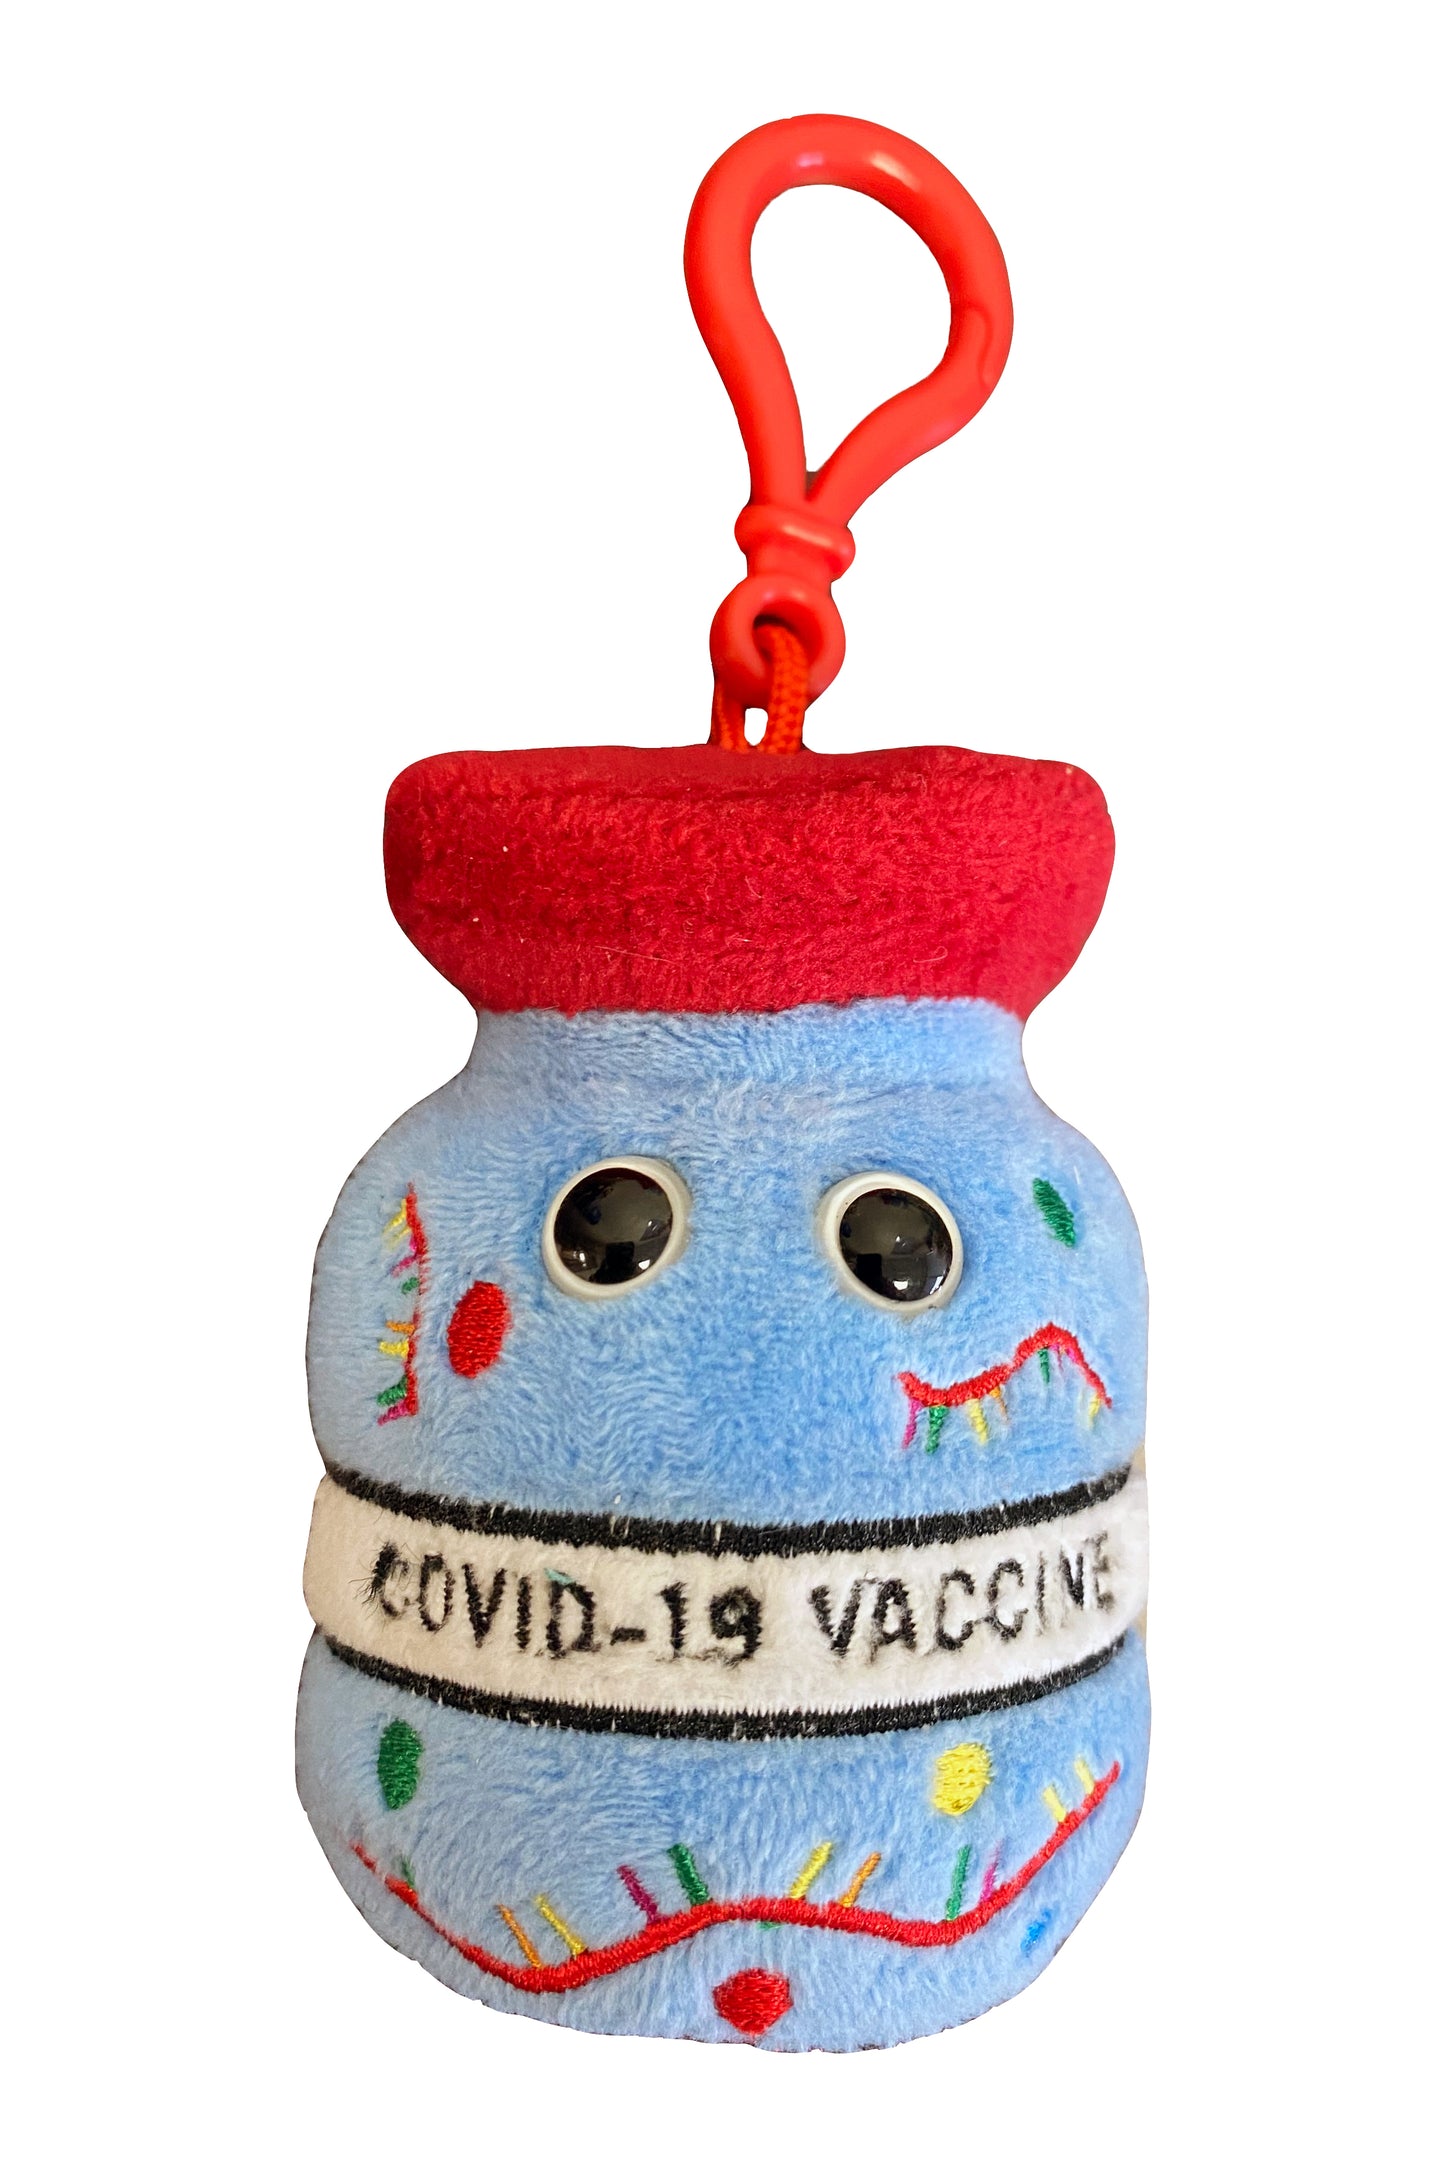 Covid-19 Vaccine Key Chain